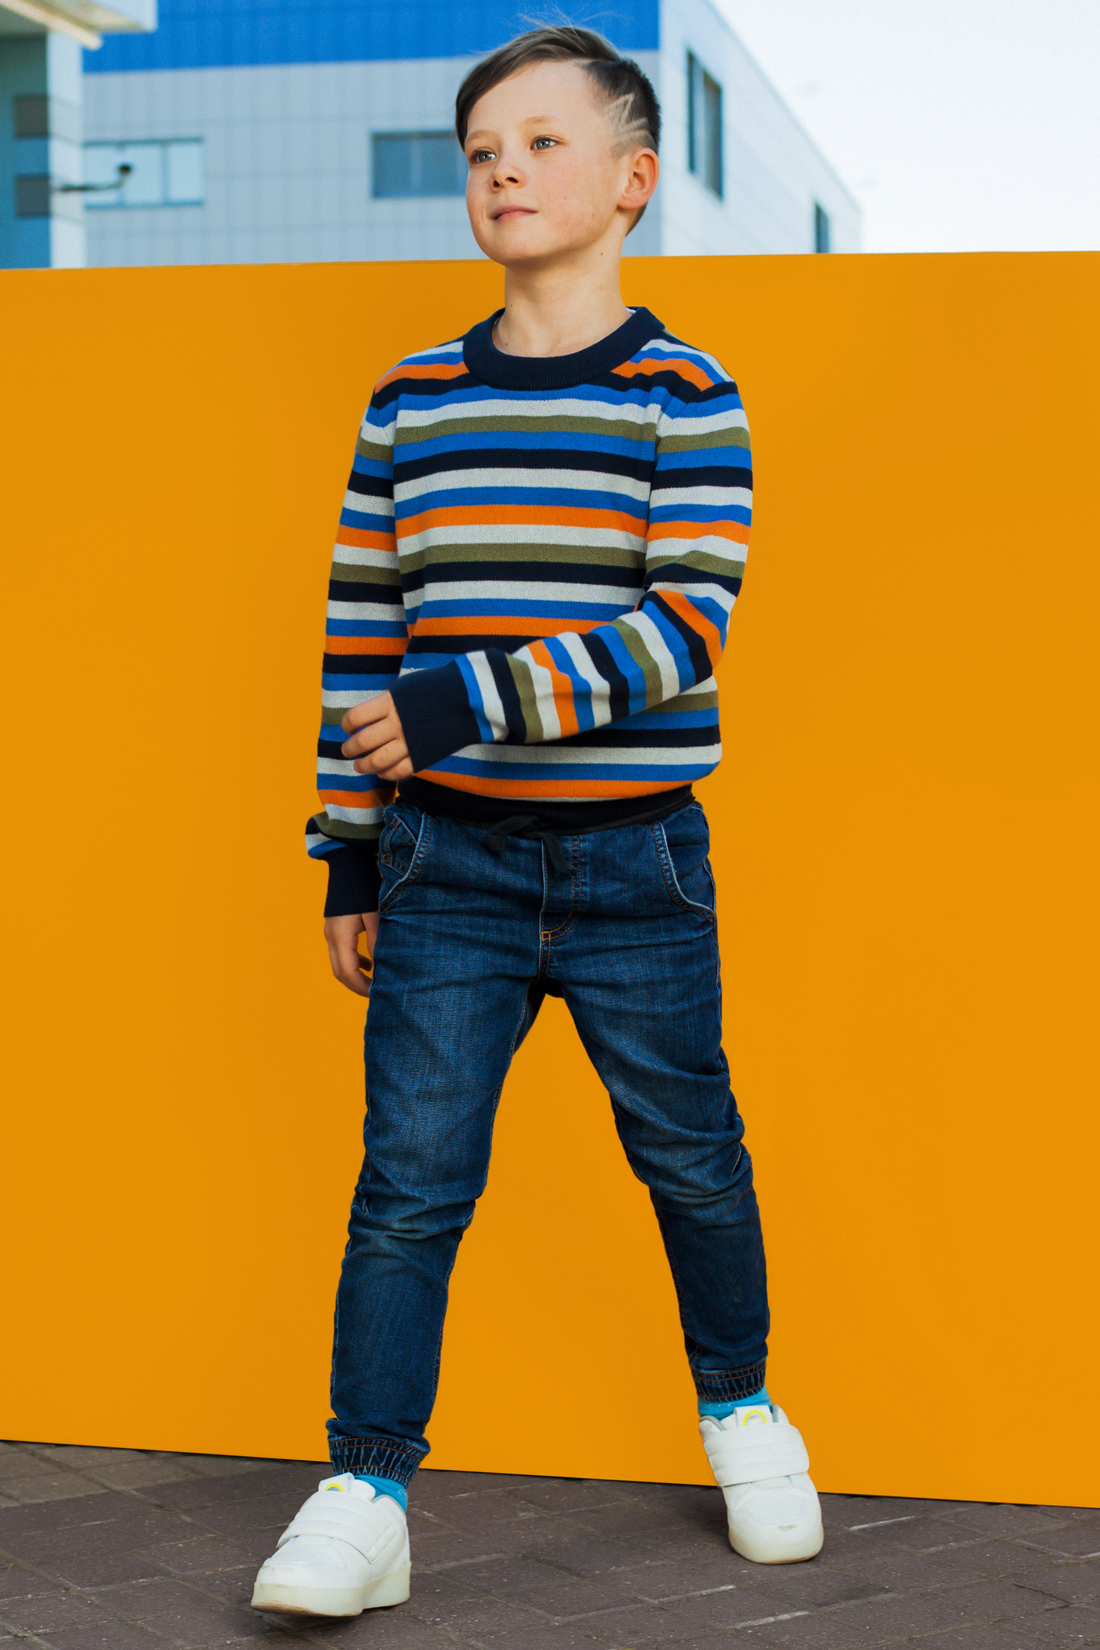 Джемпер для мальчика (арт. baon BJ638501), размер 146-152, цвет multicolor striped#многоцветный Джемпер для мальчика (арт. baon BJ638501) - фото 1